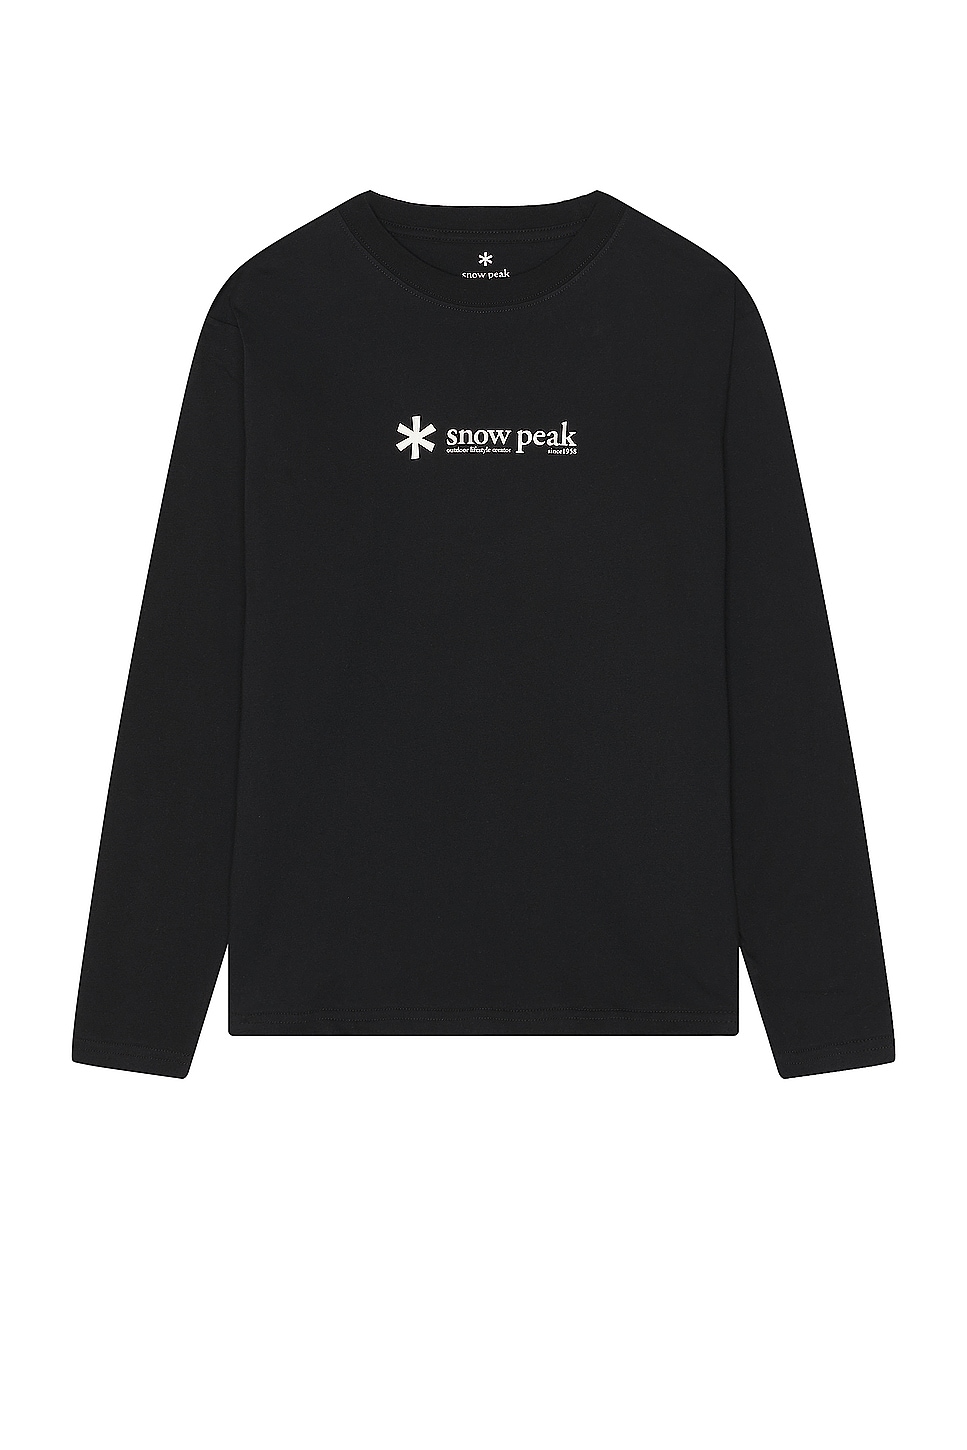 Image 1 of Snow Peak Soft Cotton Logo Long Sleeve T-Shirt in Black